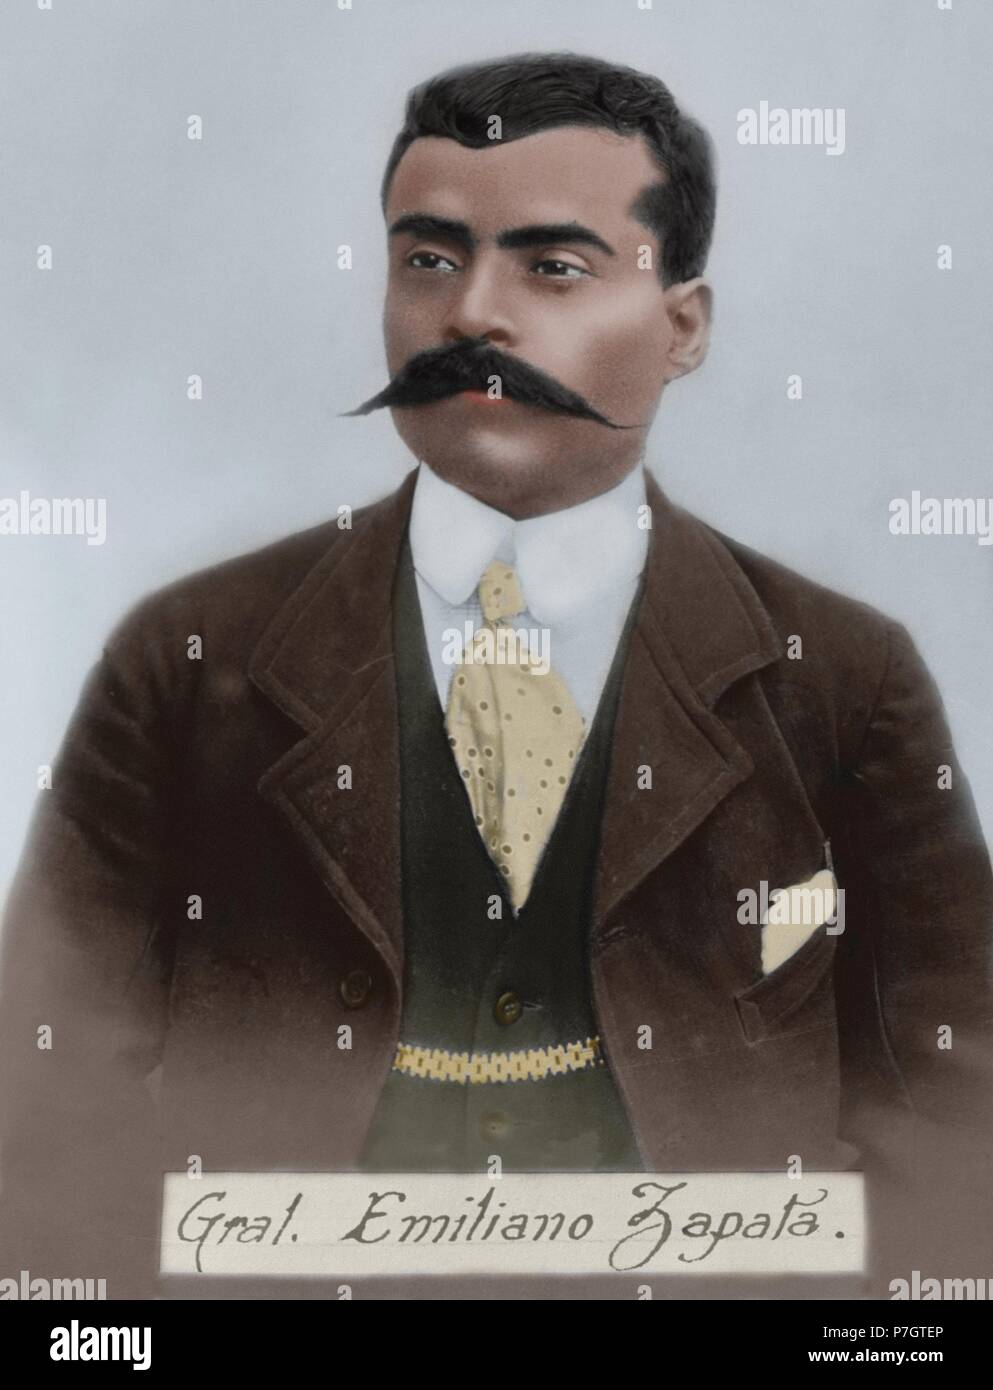 Emiliano Zapata Salazar (1879-1919). Mexikanischer revolutionär. Porträt. Fotografische Reproduktion. Farbige. Stockfoto